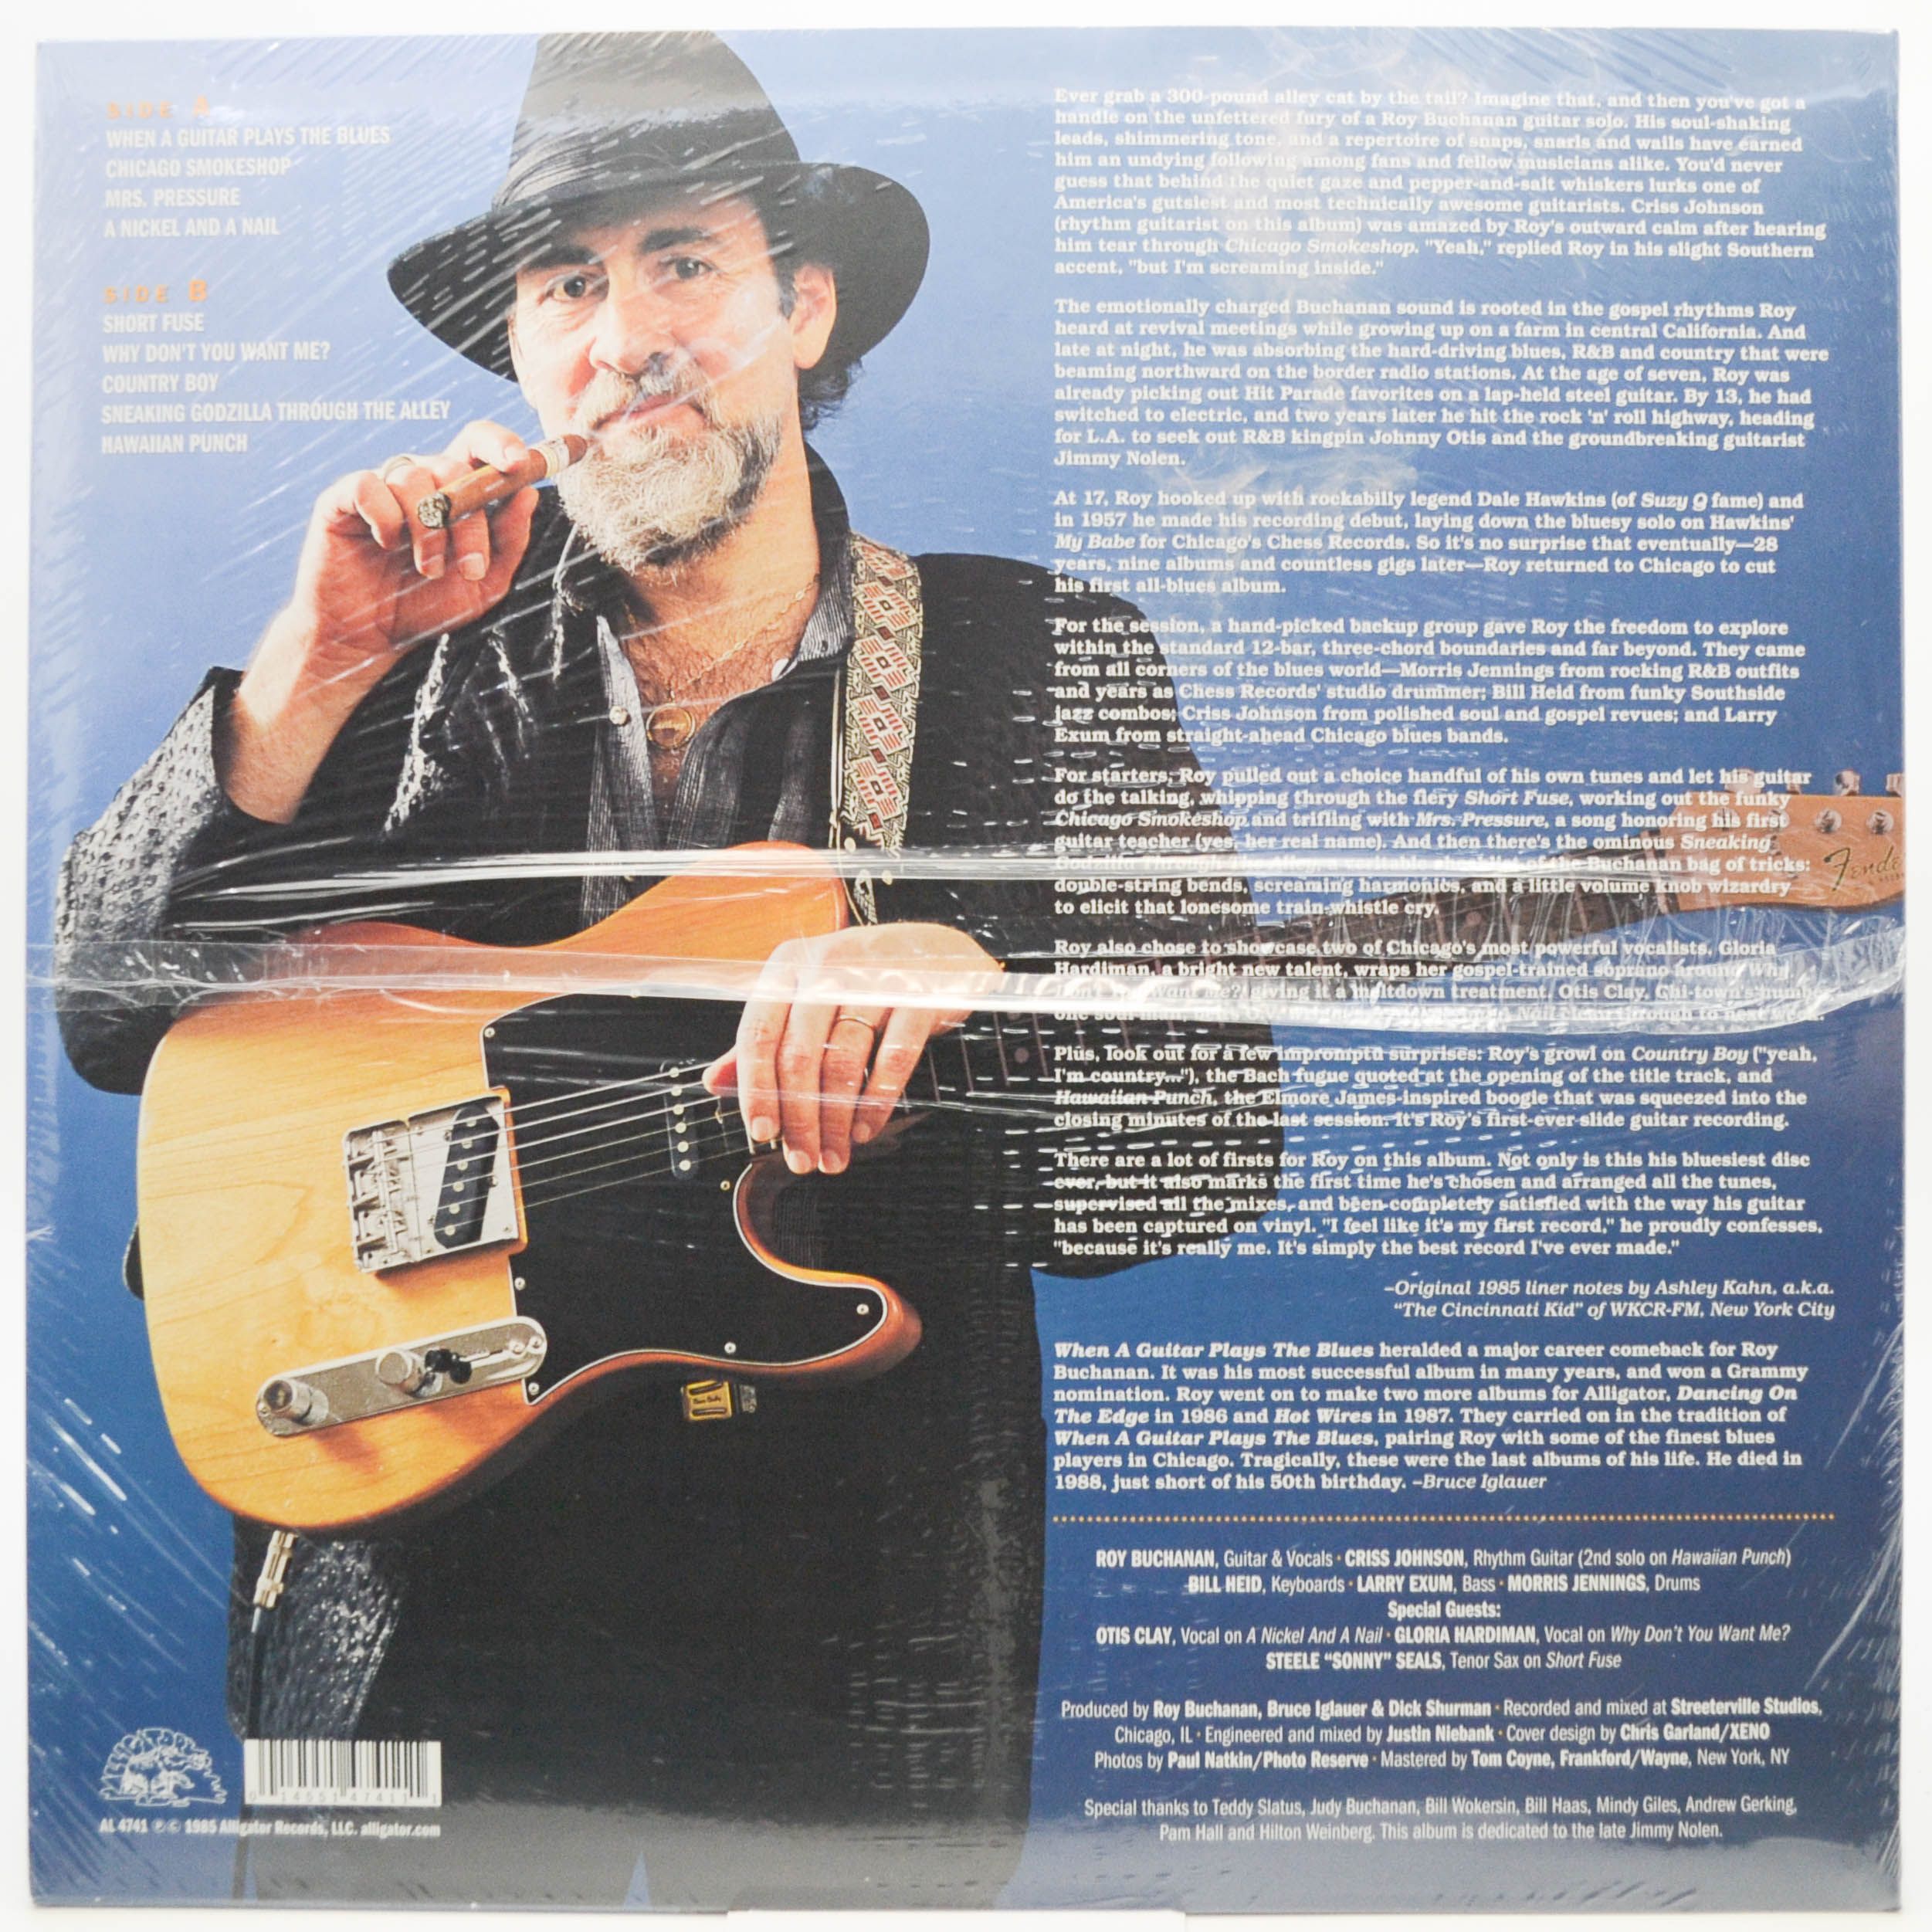 Roy Buchanan — When A Guitar Plays The Blues, 1985